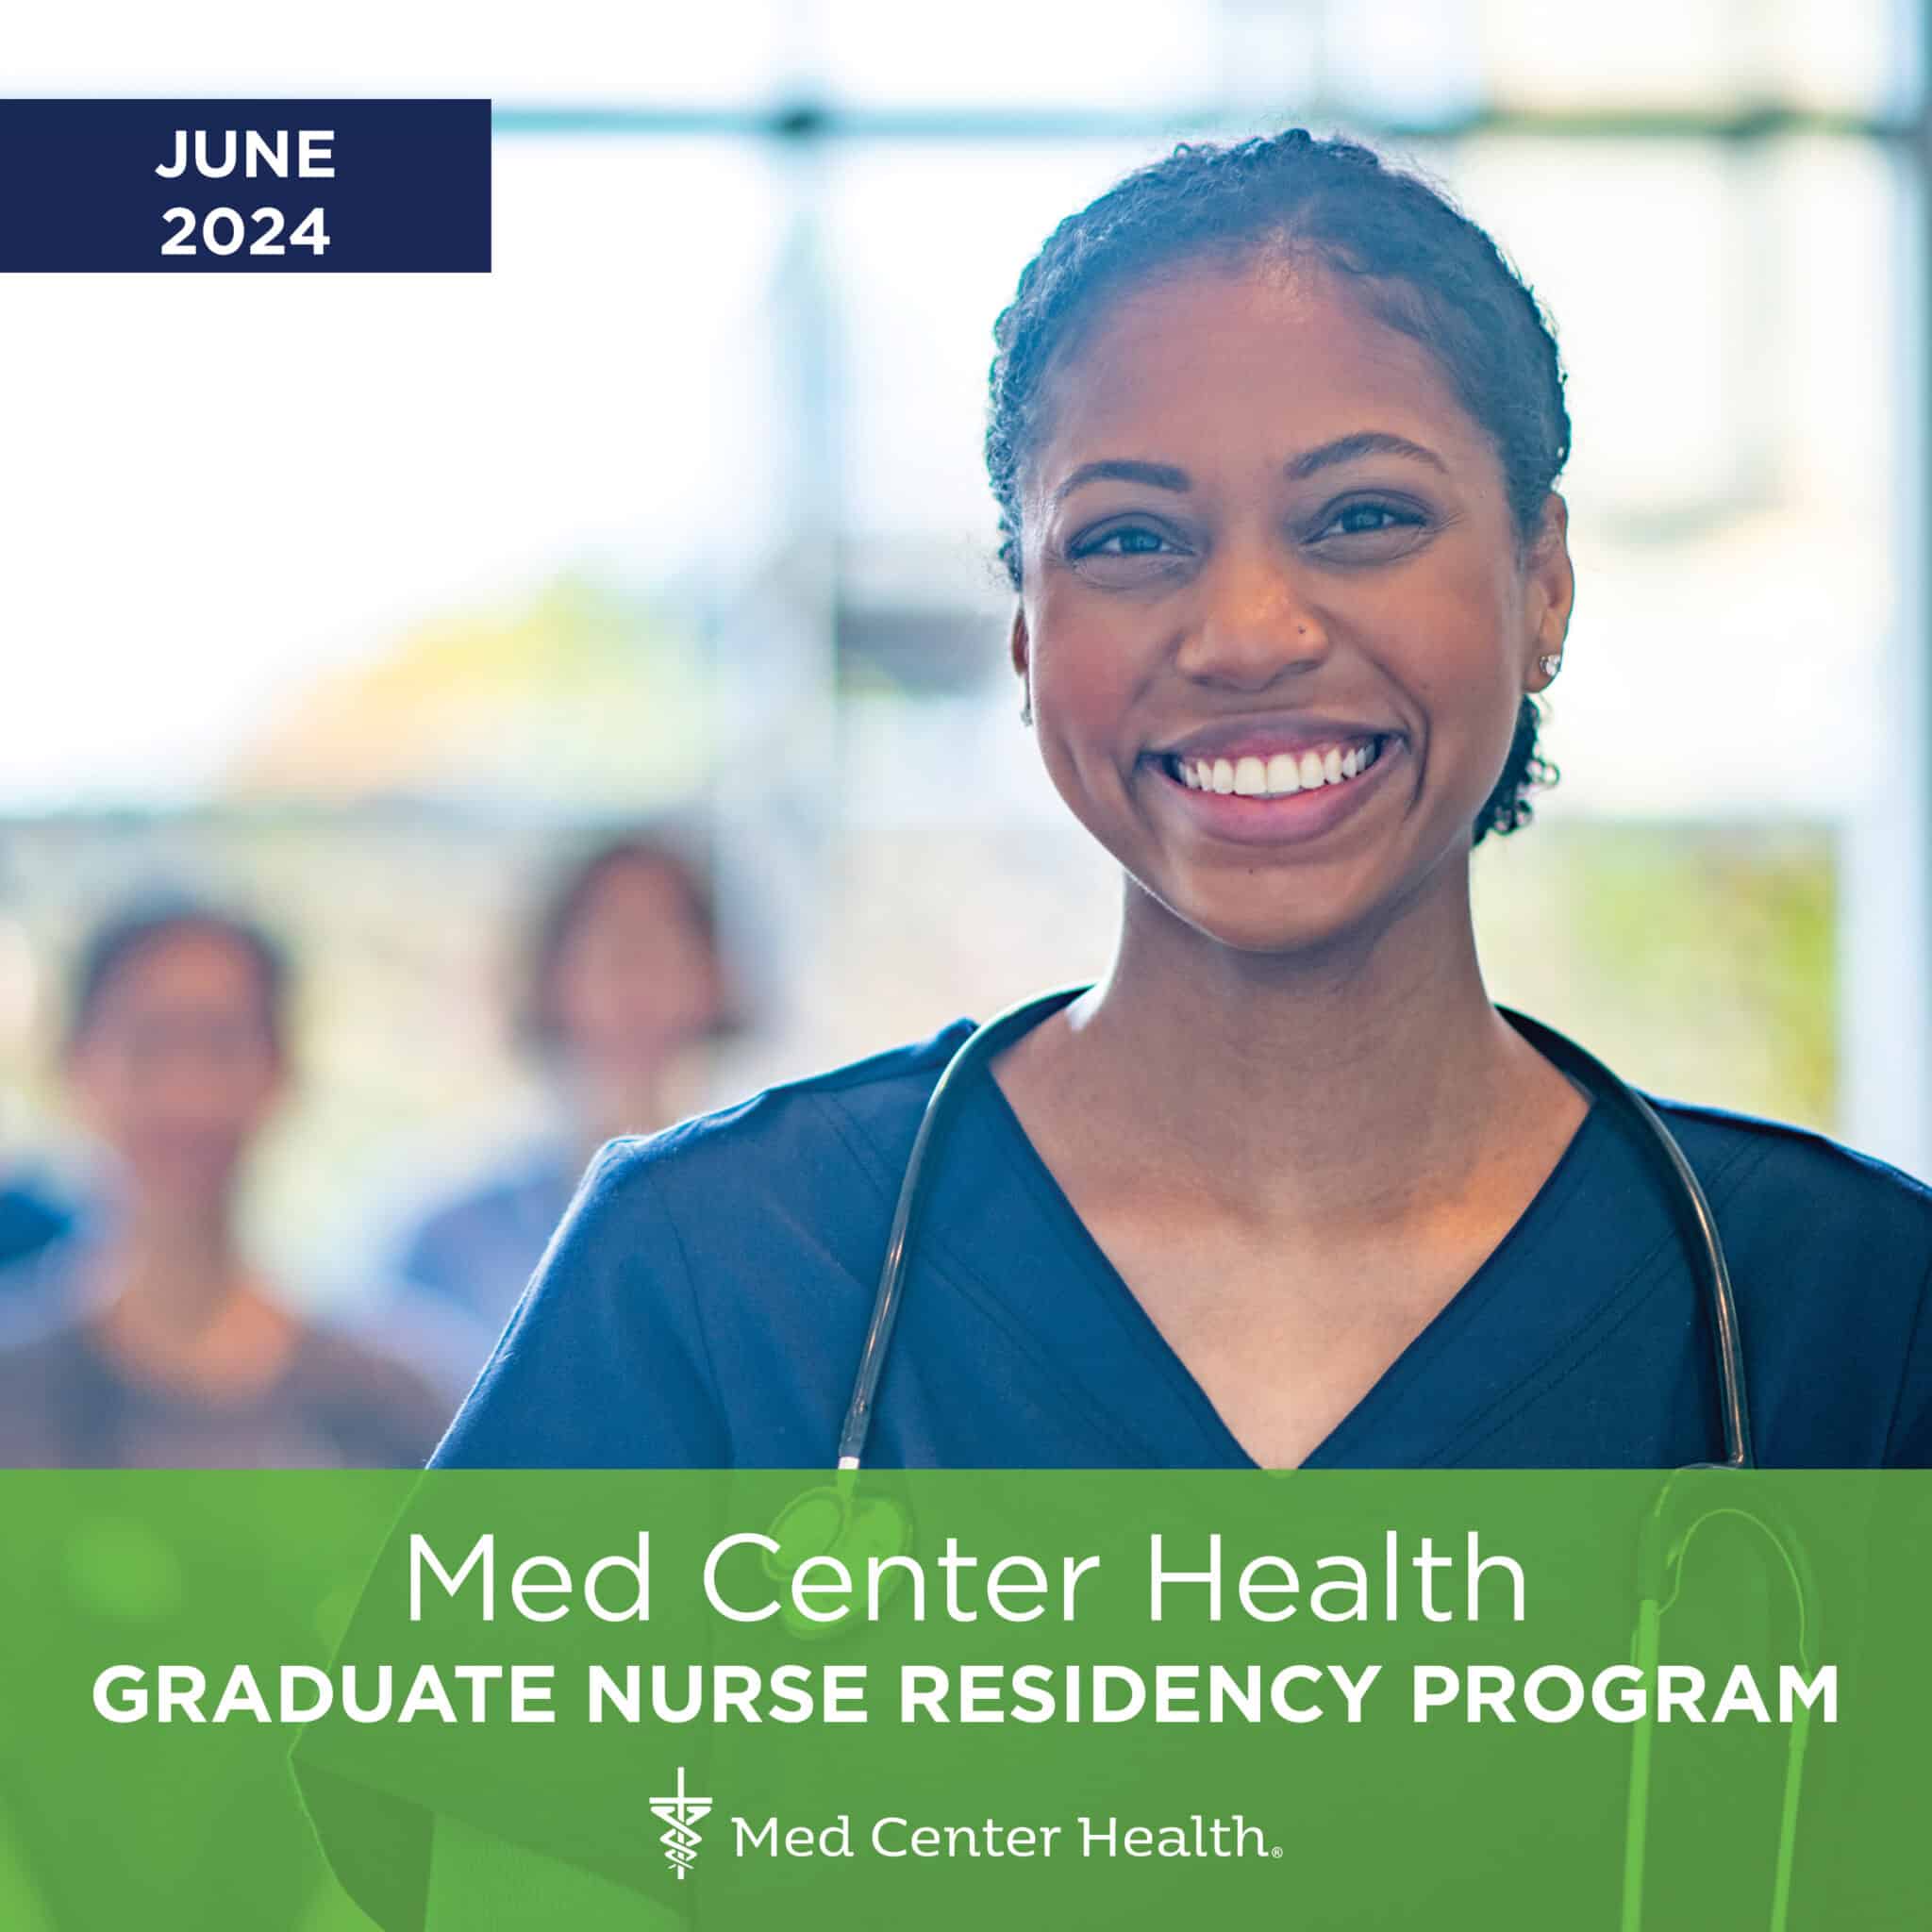 Graduate Nurse Residency Program open for Spring graduates – Med